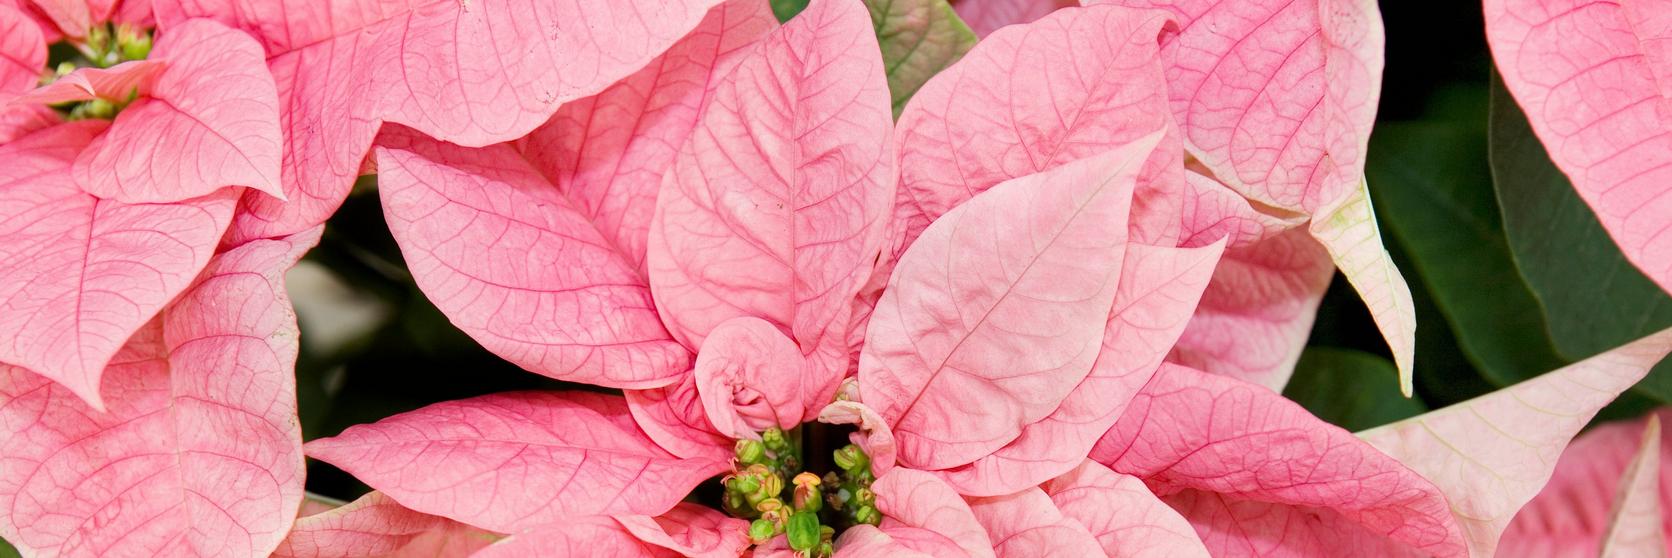 poinsettia-pink-plant